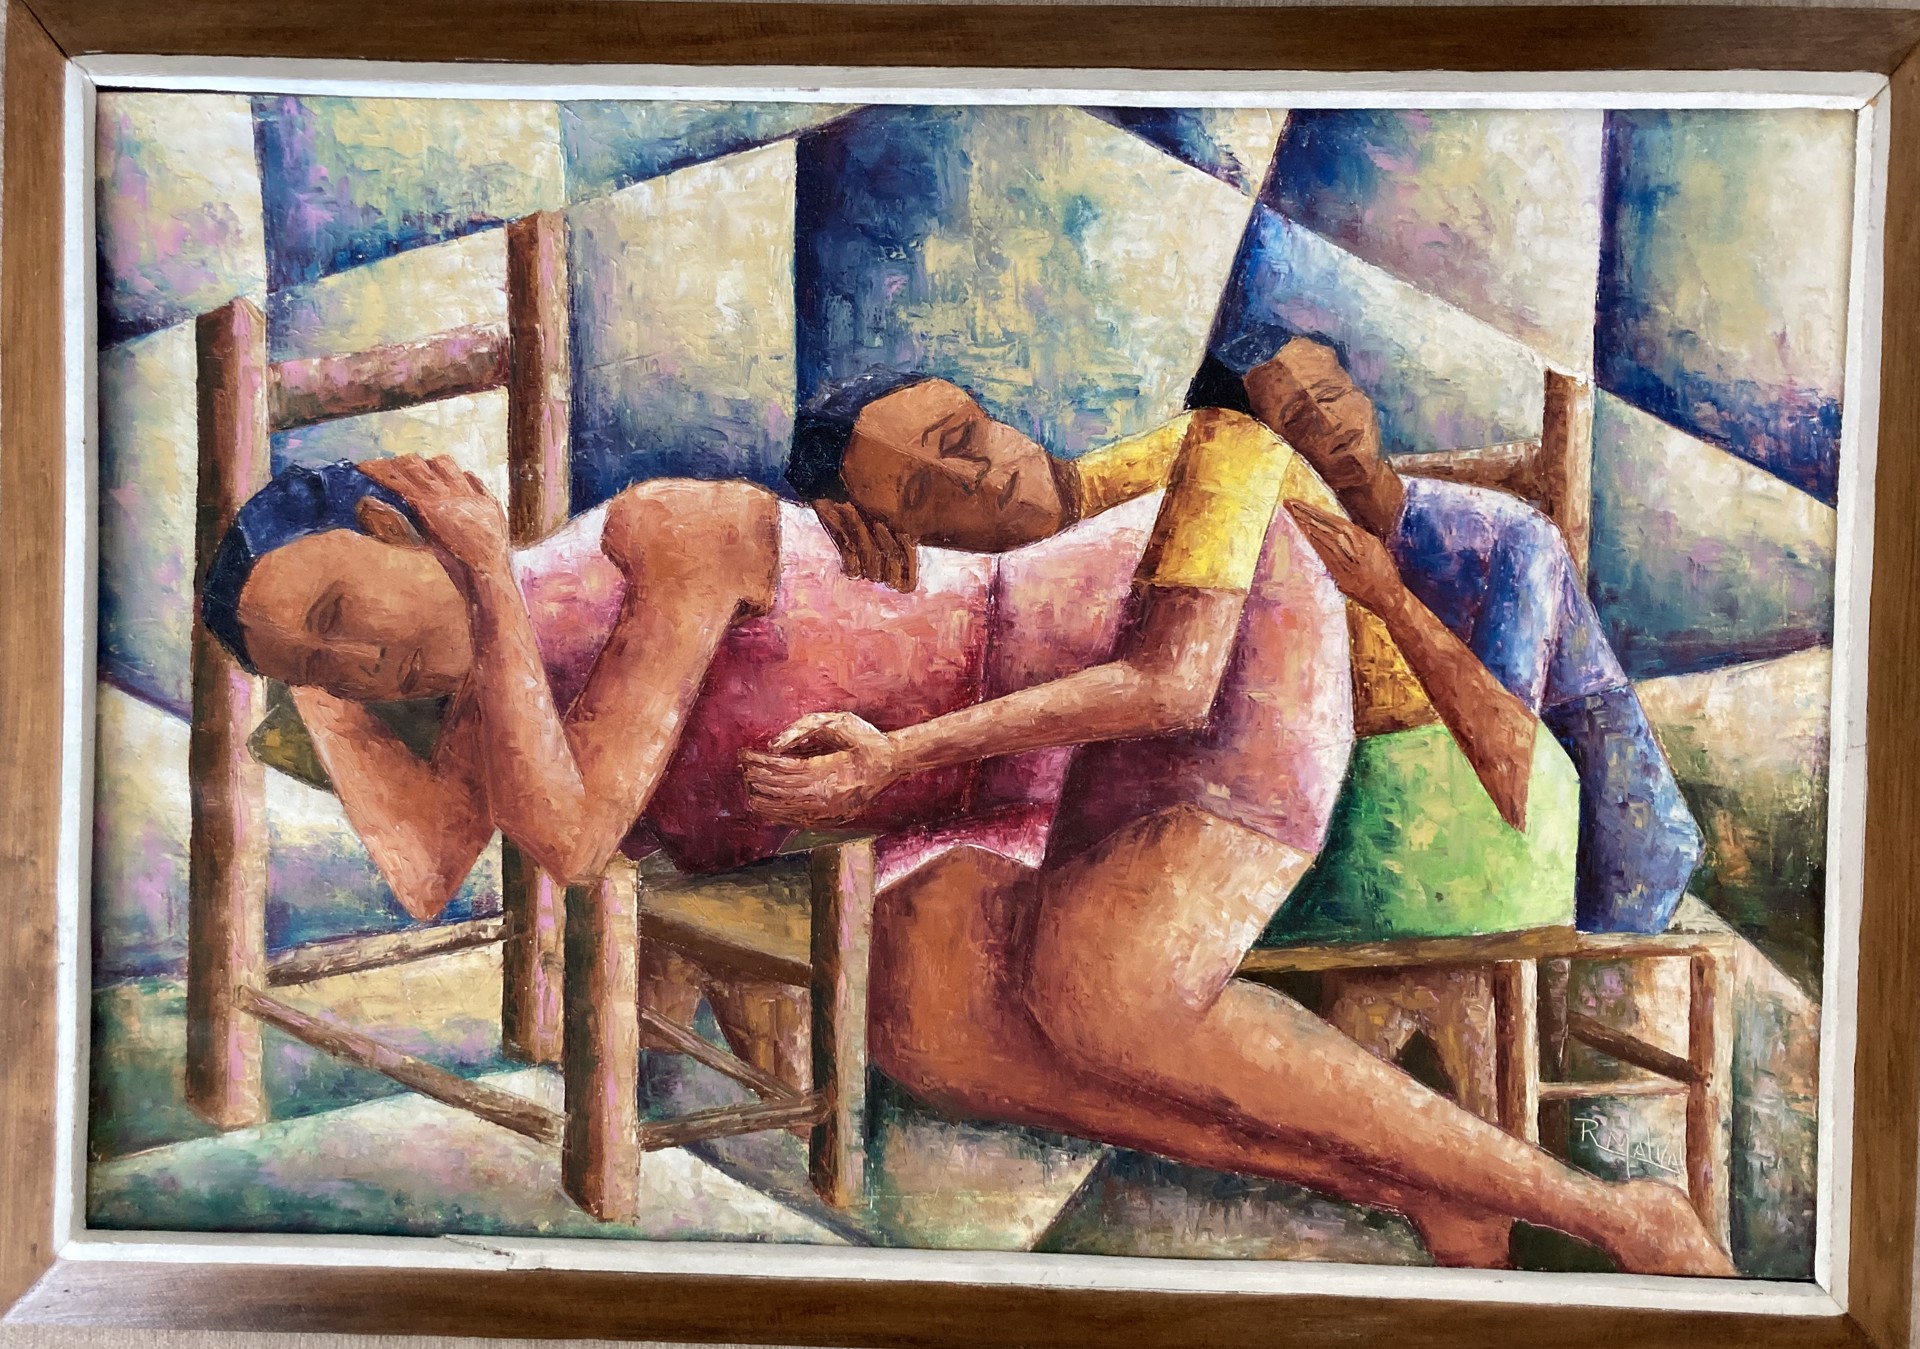 La Siesta #1LNY by Raymond Malval (Haitian, 1932-?)